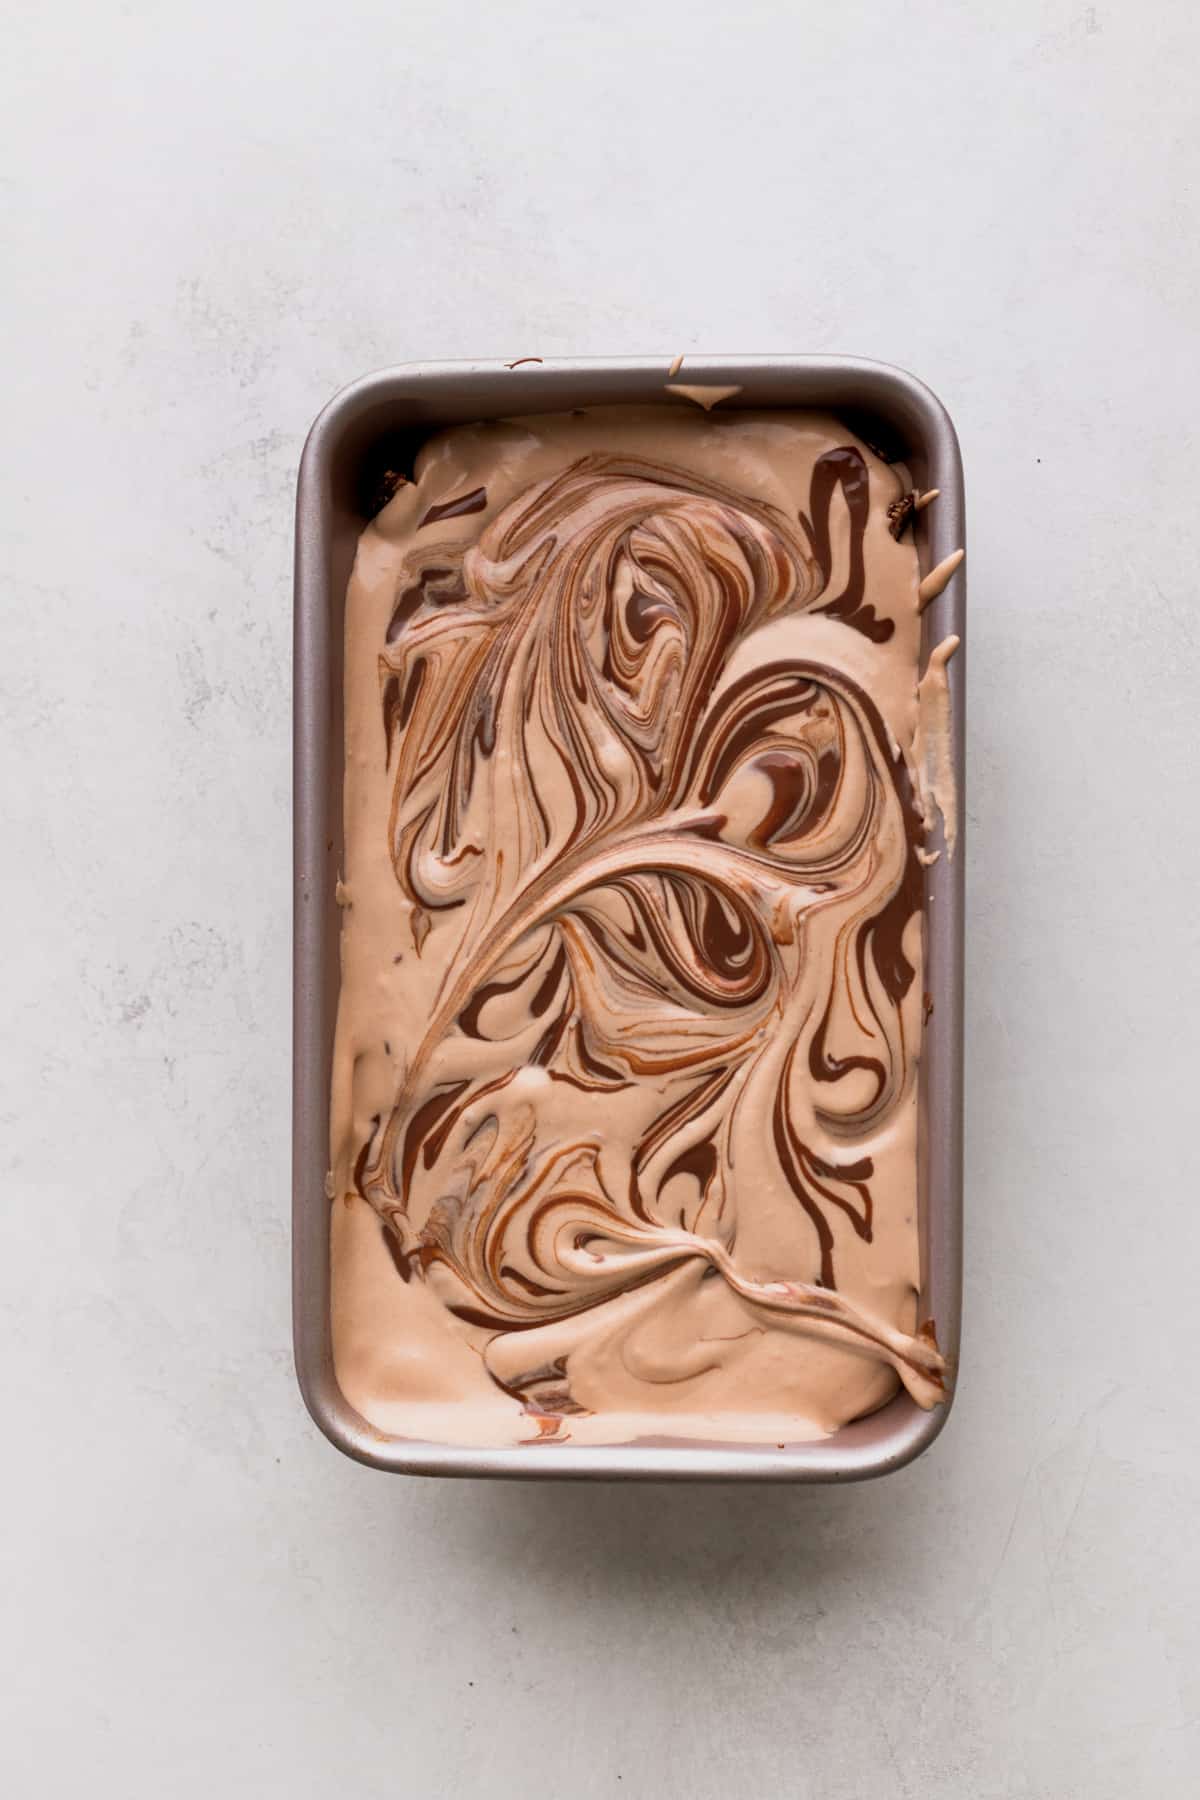 Swirled Nutella on top of ice cream.